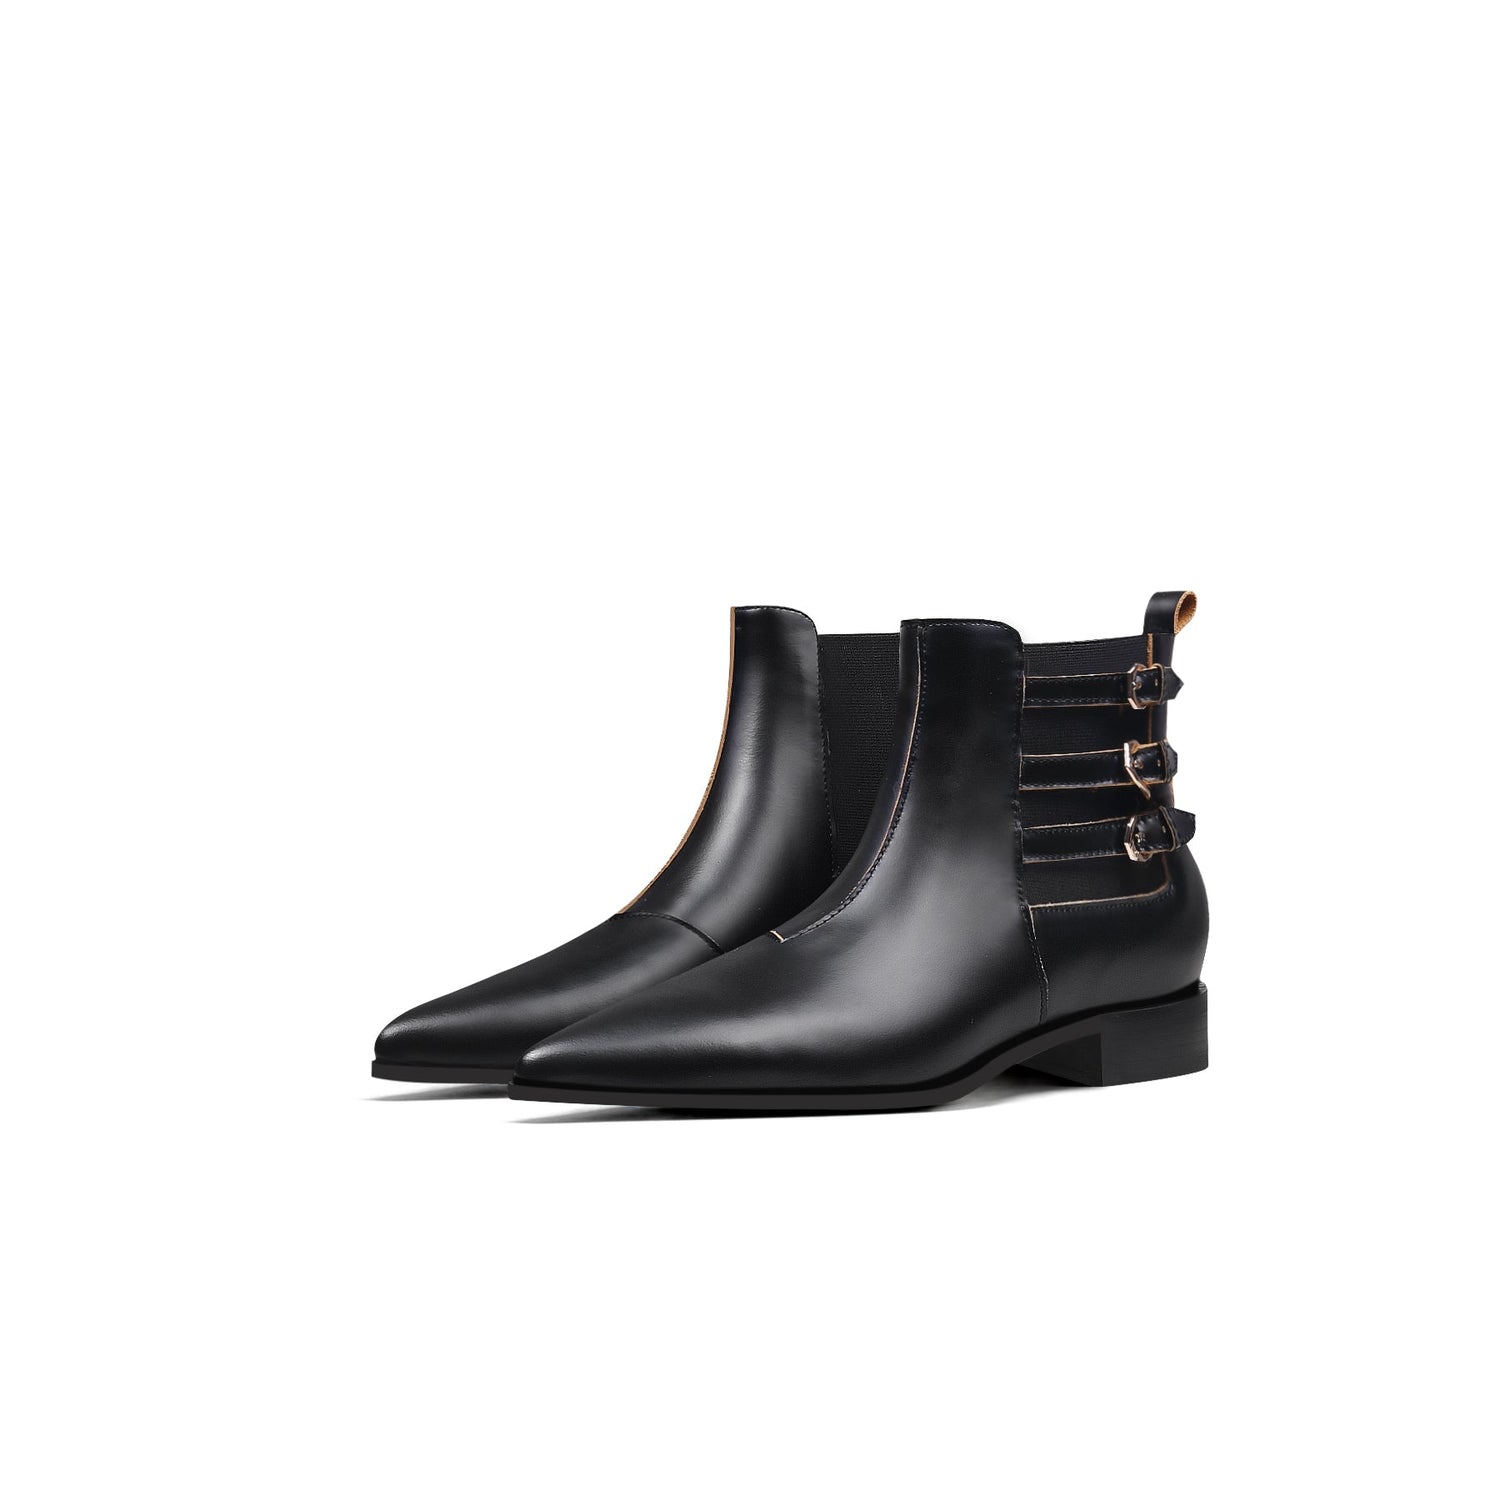 Smart Buckles Black Boots - 0cm